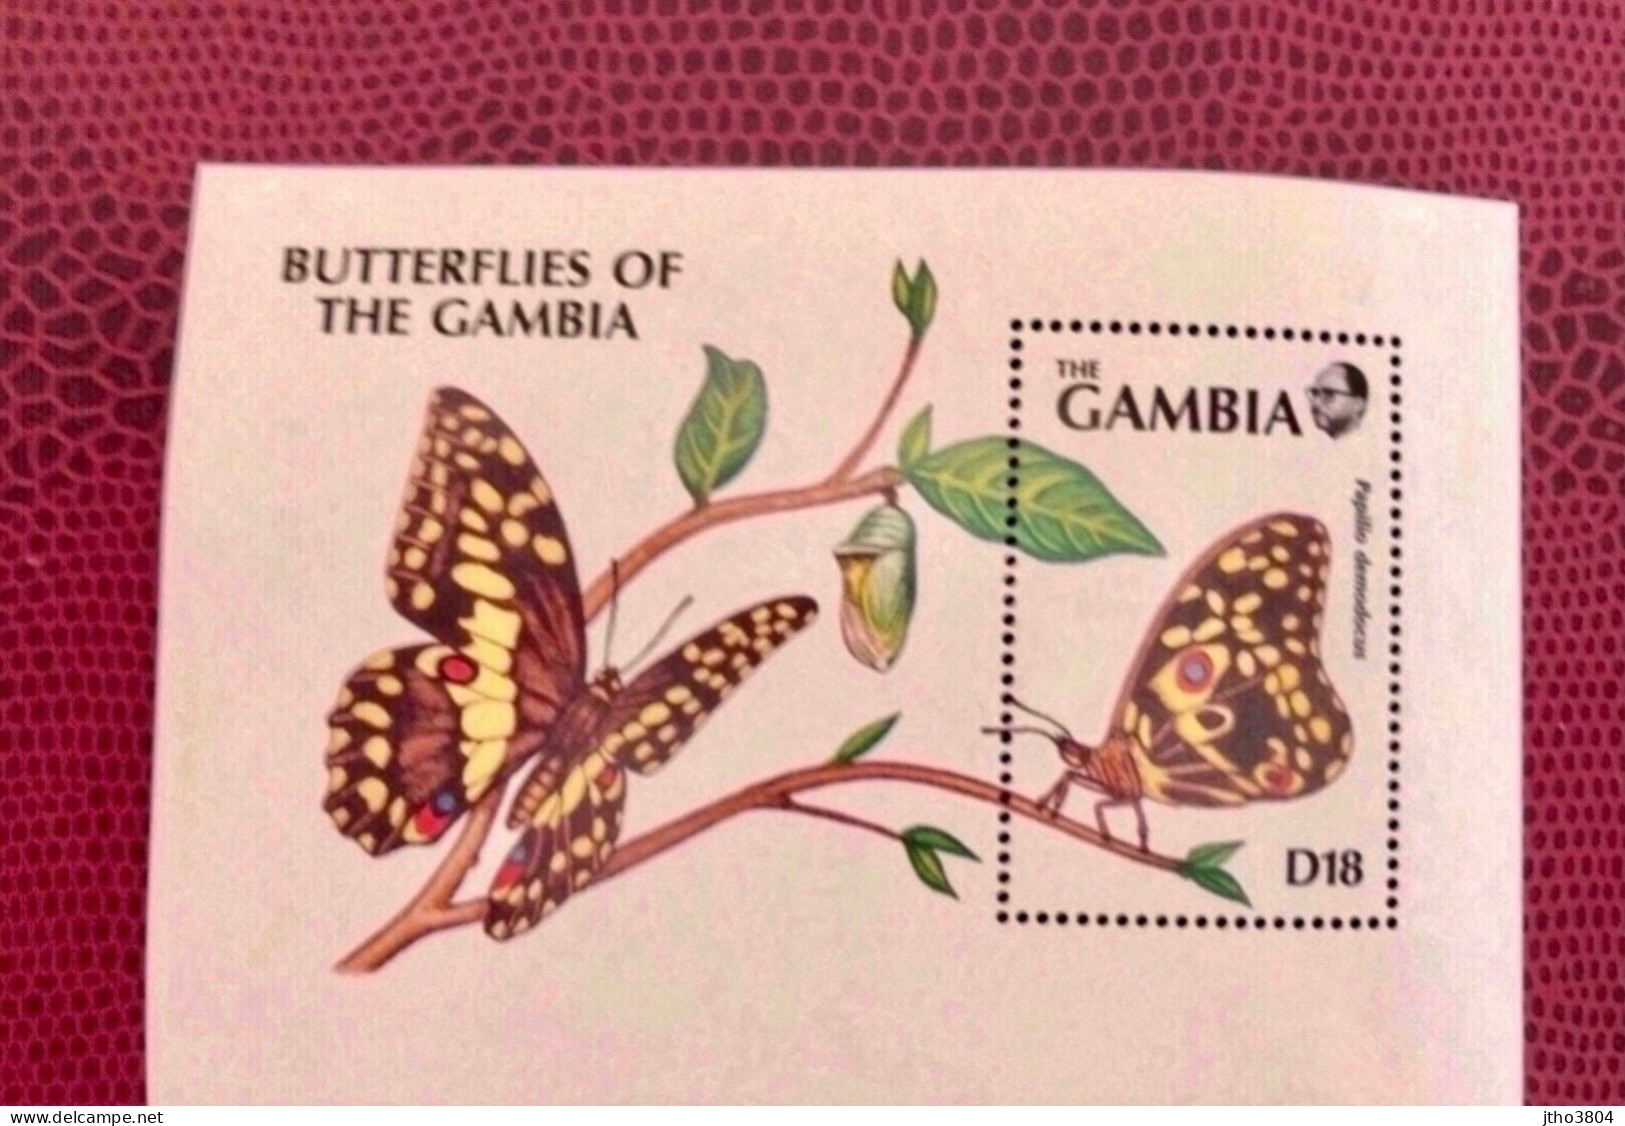 GAMBIE  2 Blocs Neuf MNH **  Farfalle Papillons Butterflies Mariposas Schmetterlinge GAMBIA - Vlinders